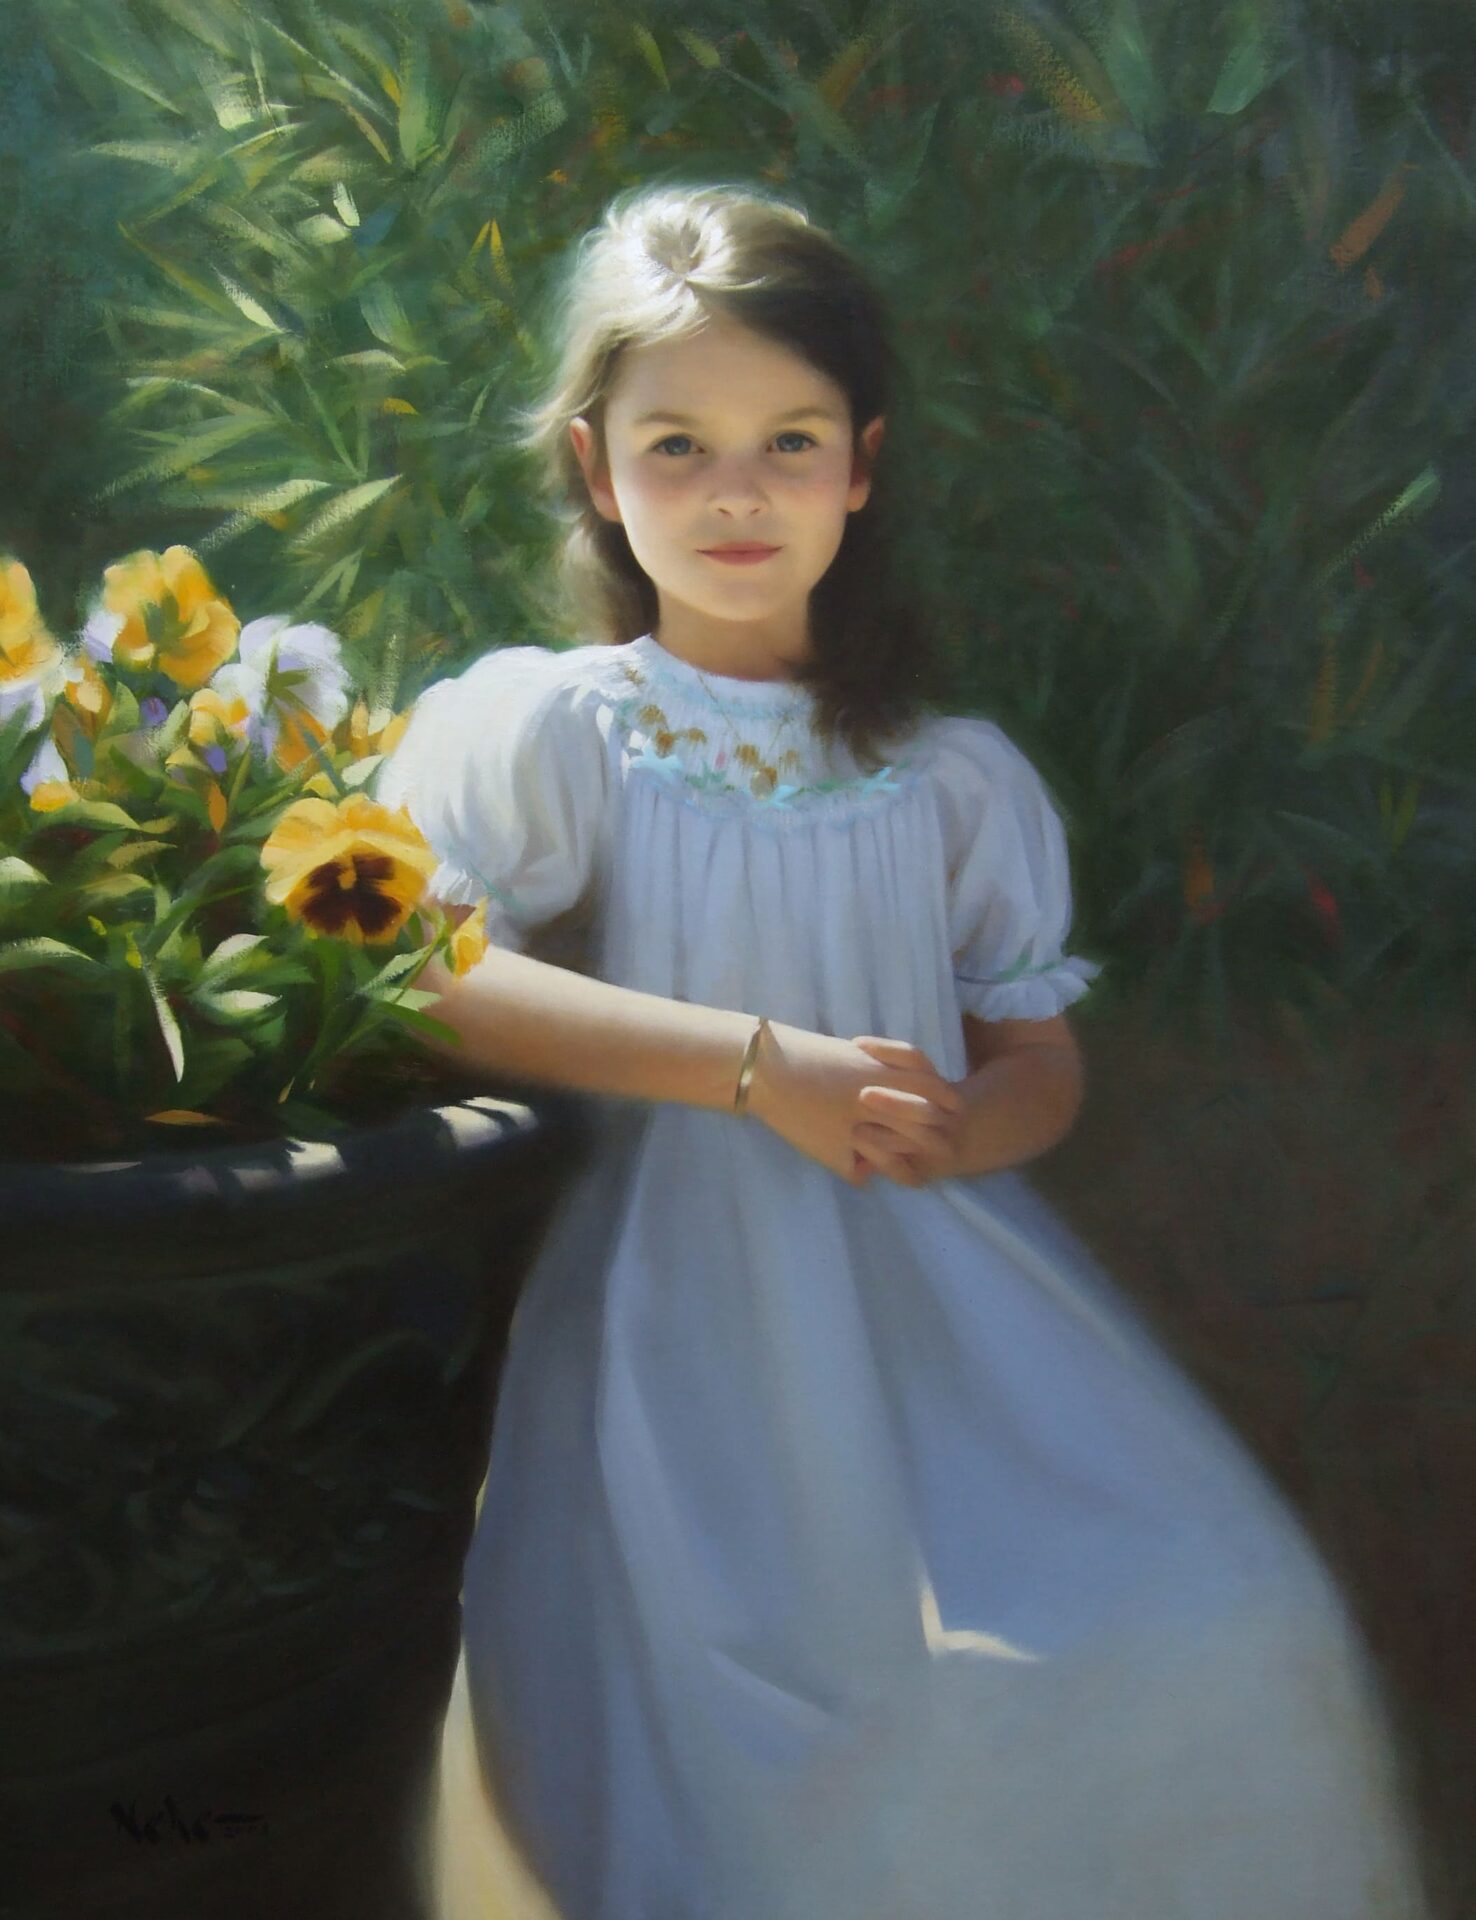 A little girl’s portrait painting